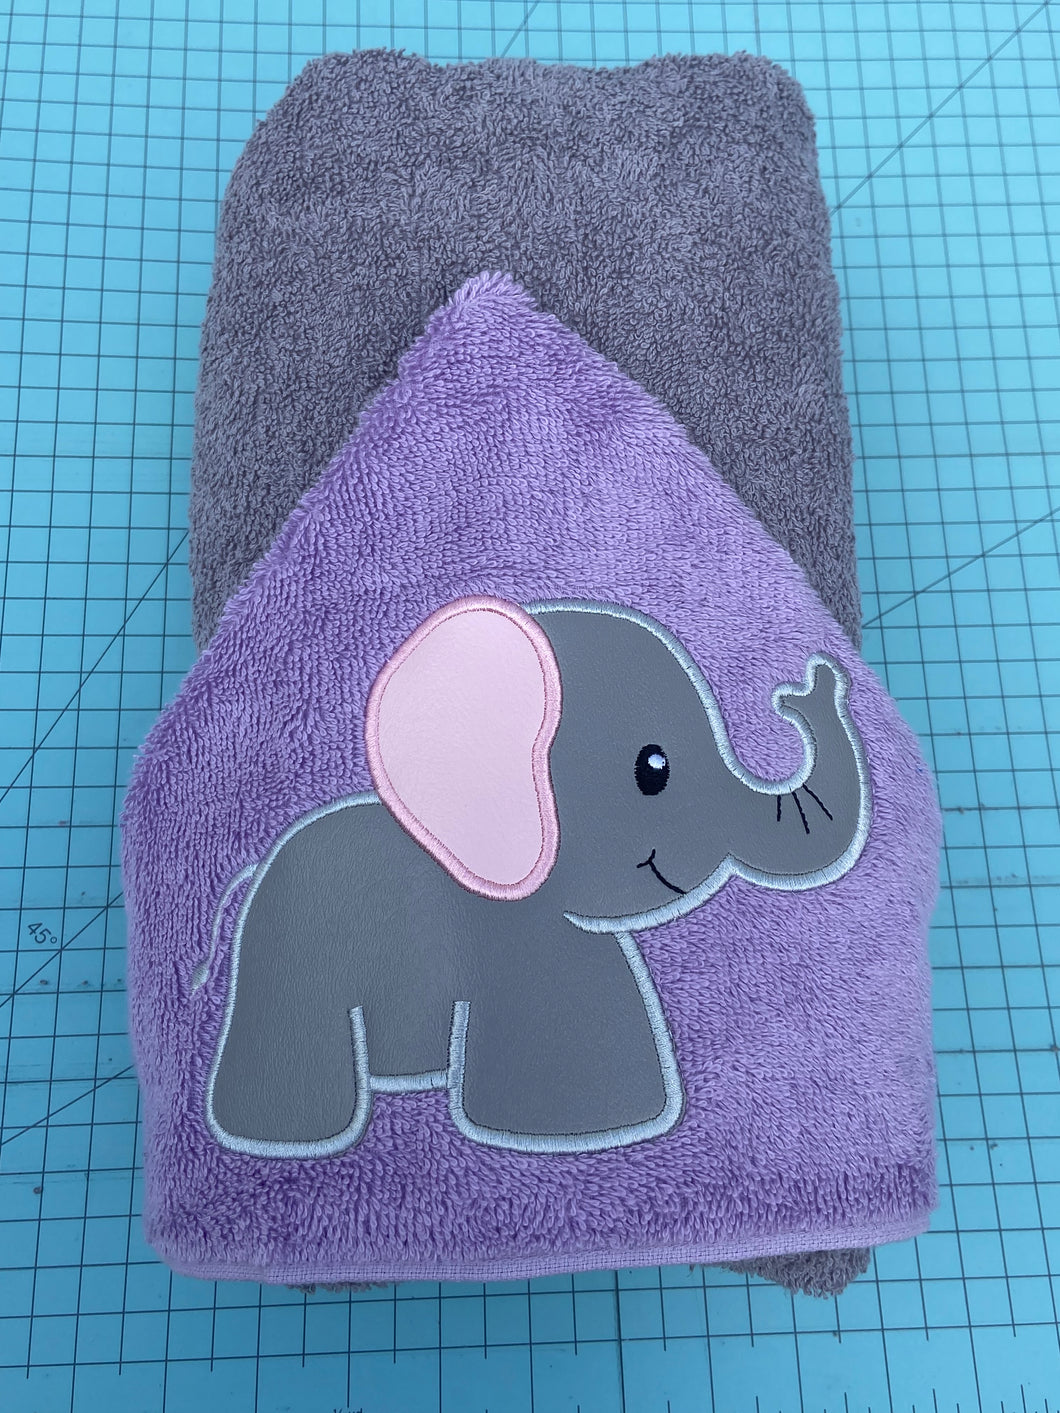 Elephant on Bath Sheet for Kelsea